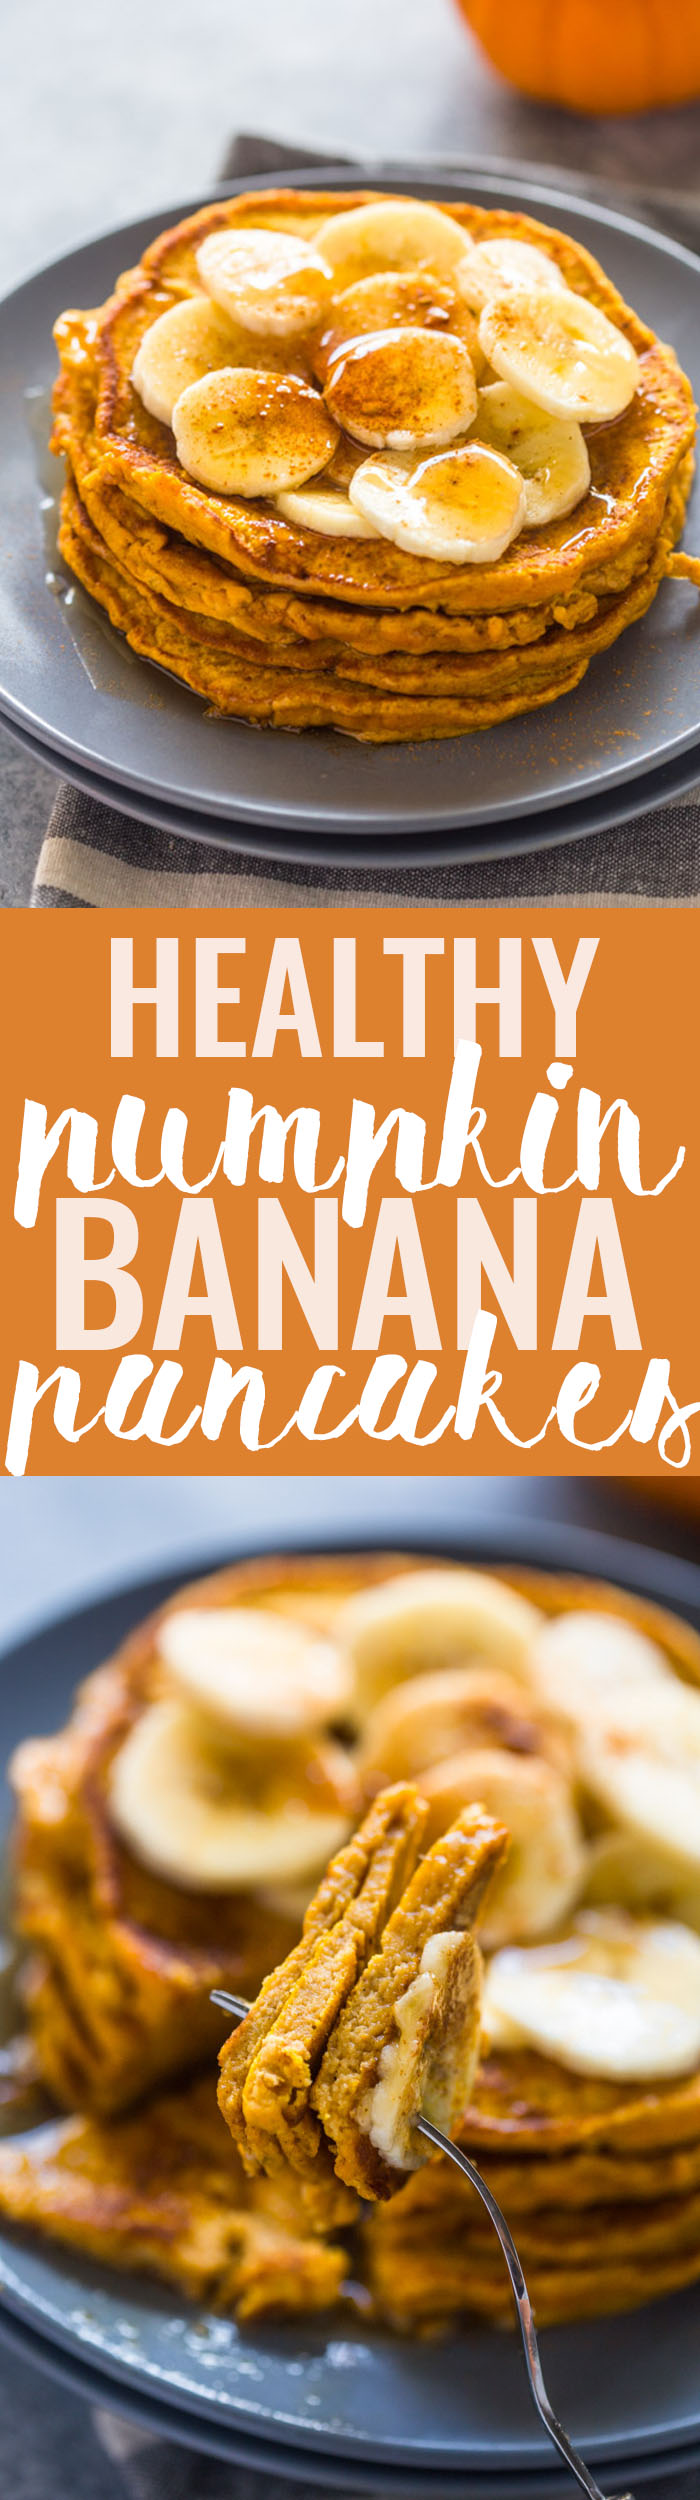 Healthy Pumpkin Banana Pancakes (Paleo, G-F, Protein Options)